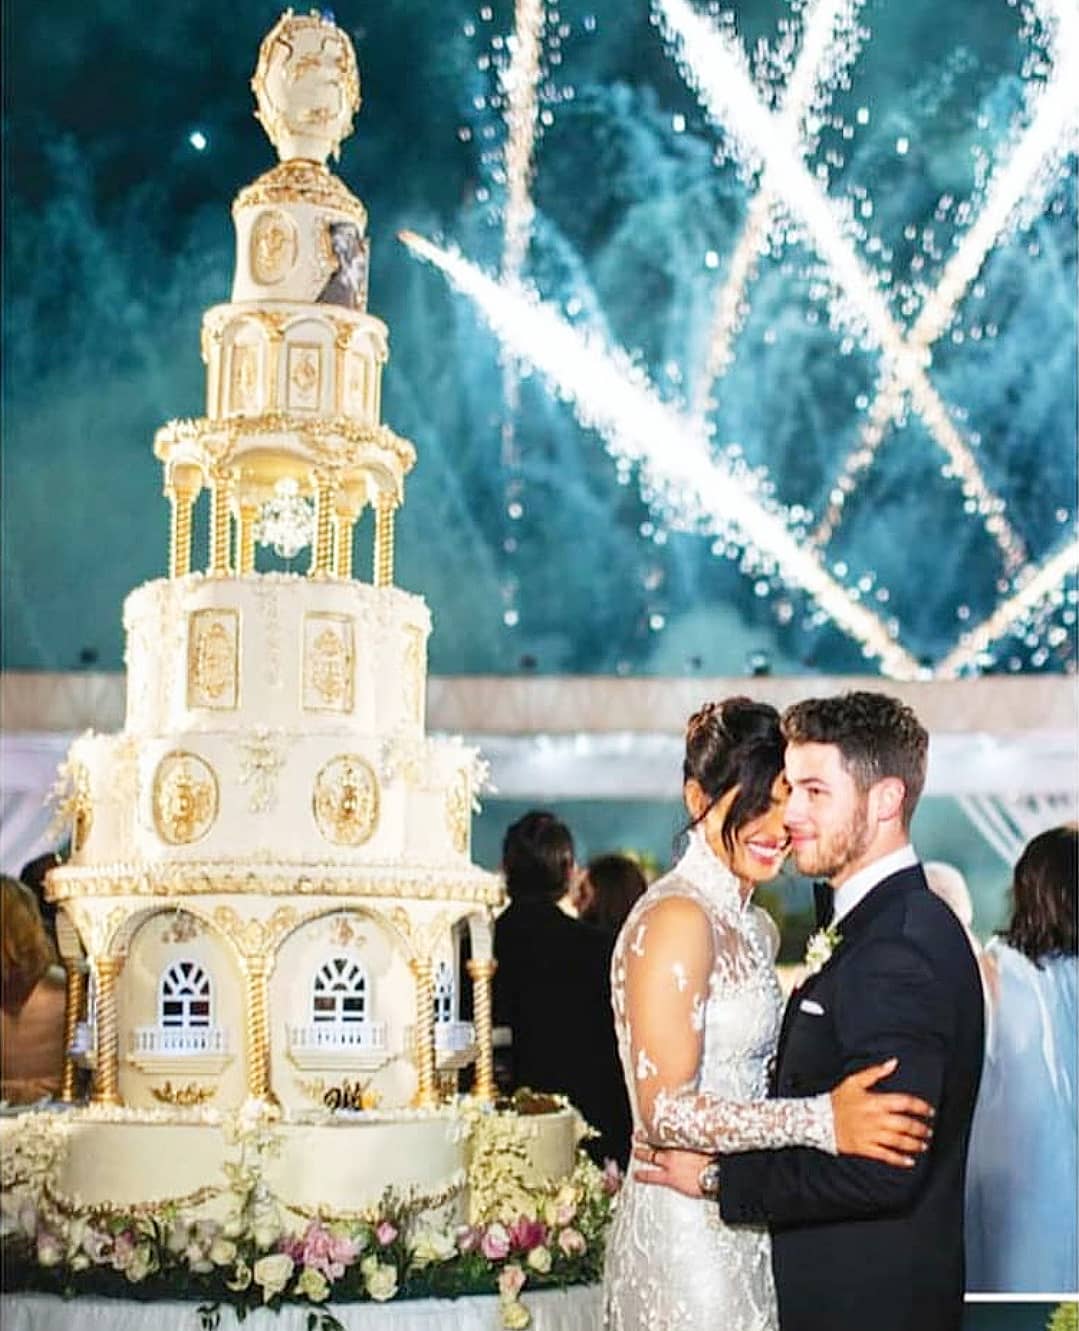 celebrity wedding cakes - Nick Jonas & Priyanka Chopra